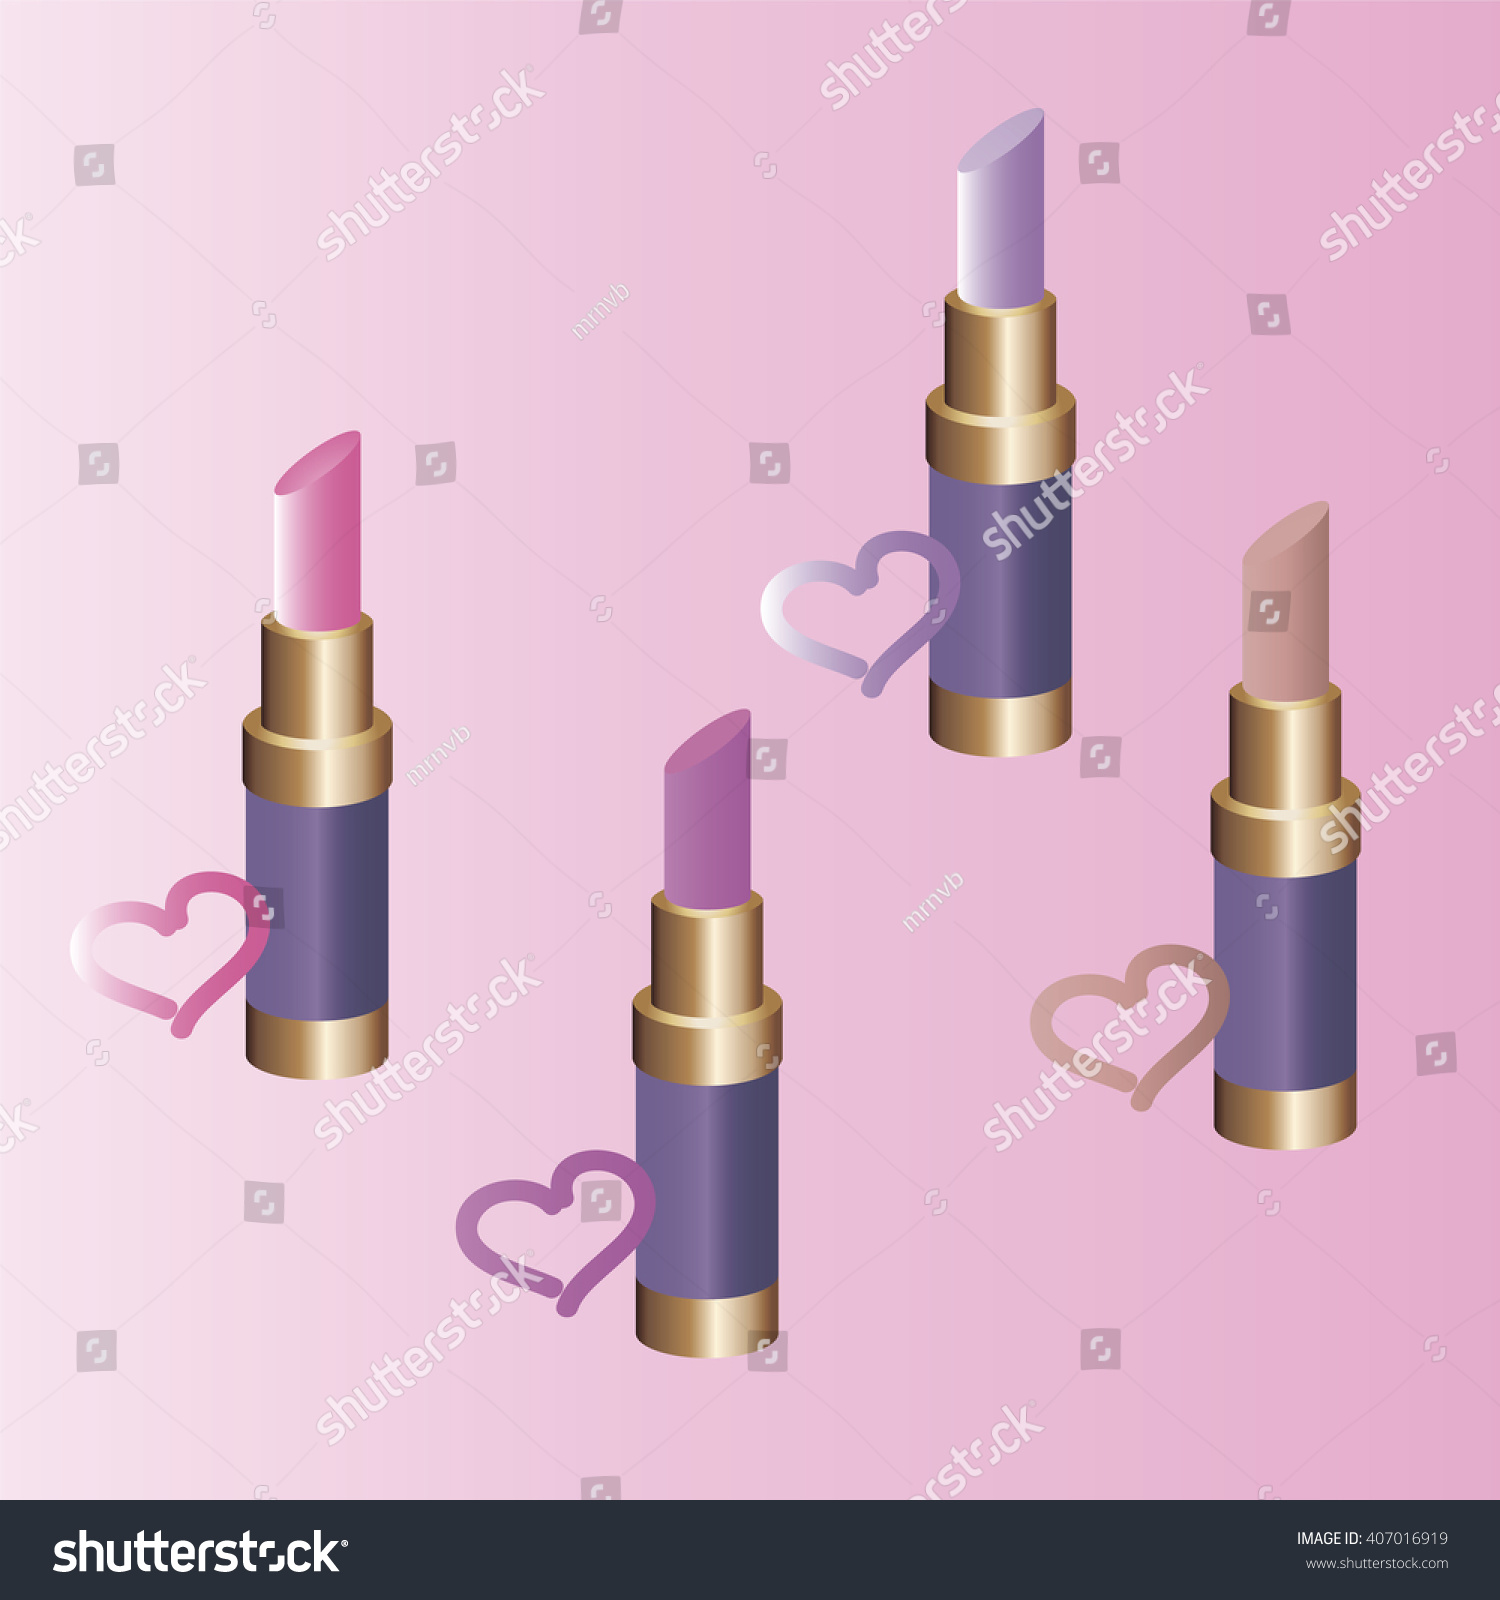 Set Colored Lipsticks Vector Illustration Different Stock Vector ...